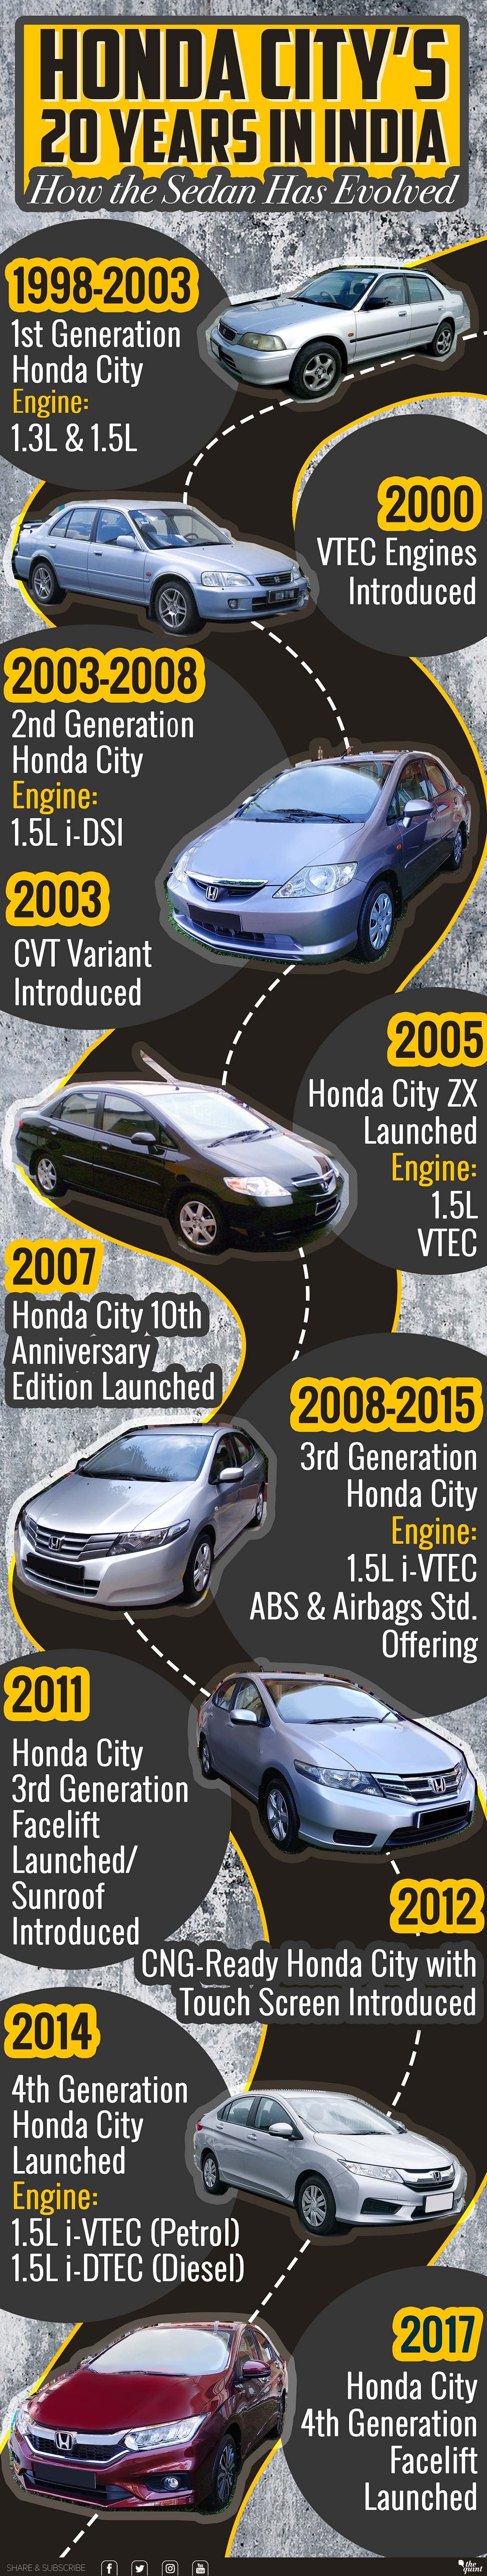 Honda City celebrates 20 years in India. Take a look back at how the Honda sedan has evolved.